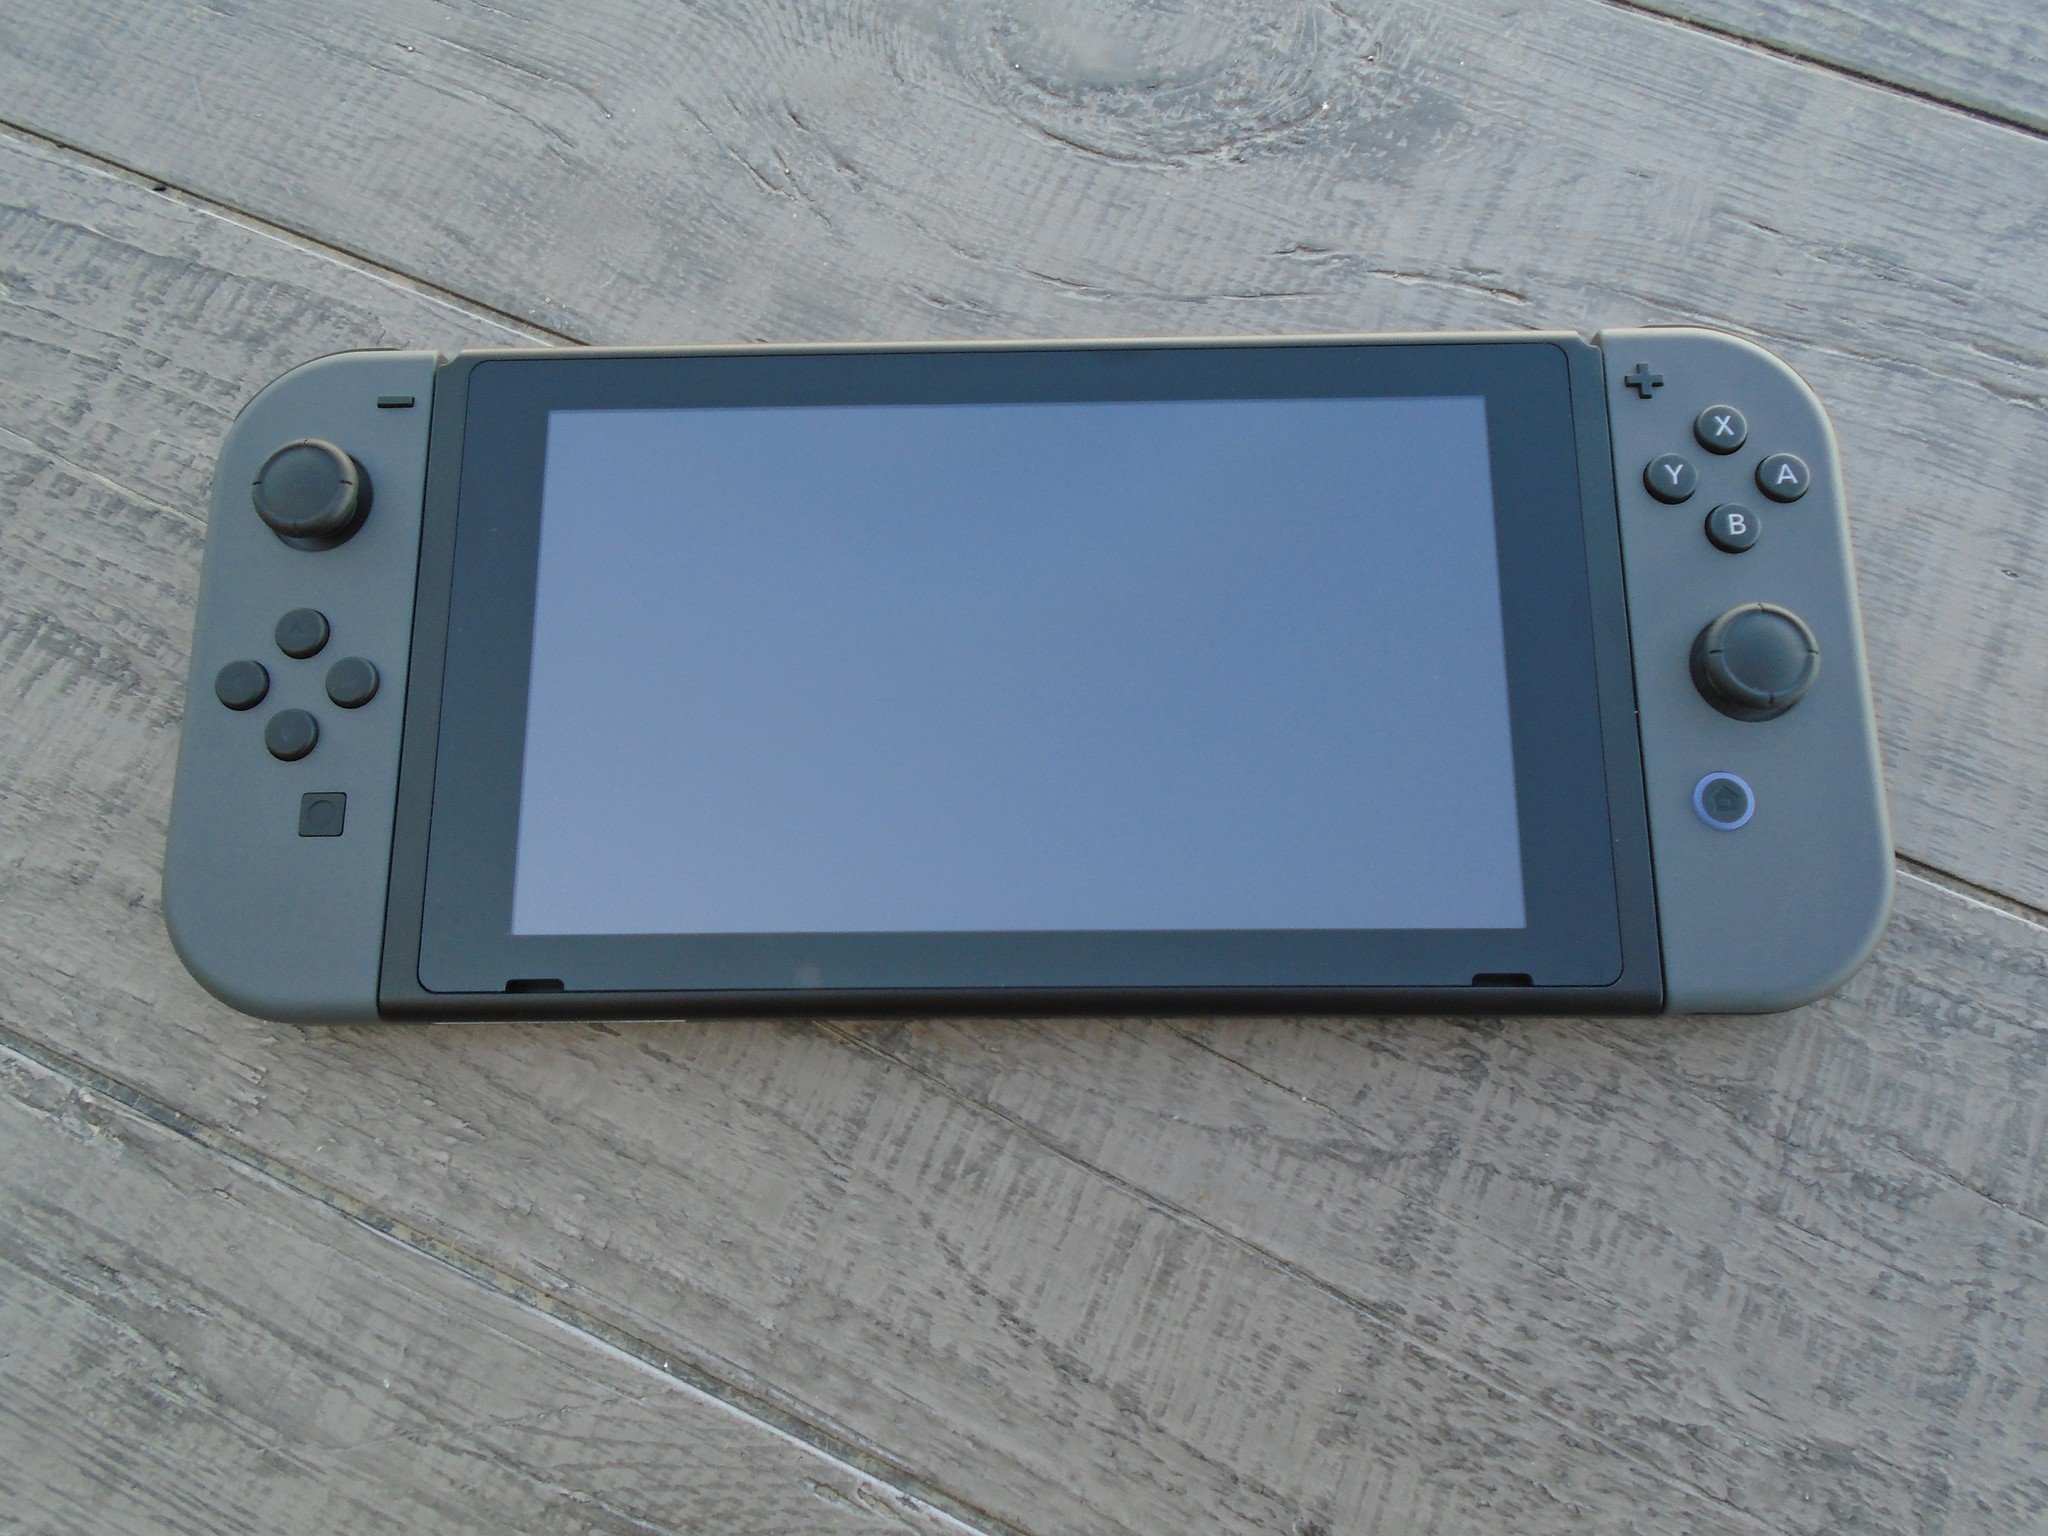 How The New Nintendo Switch V2 Compares To The Original Model Imore